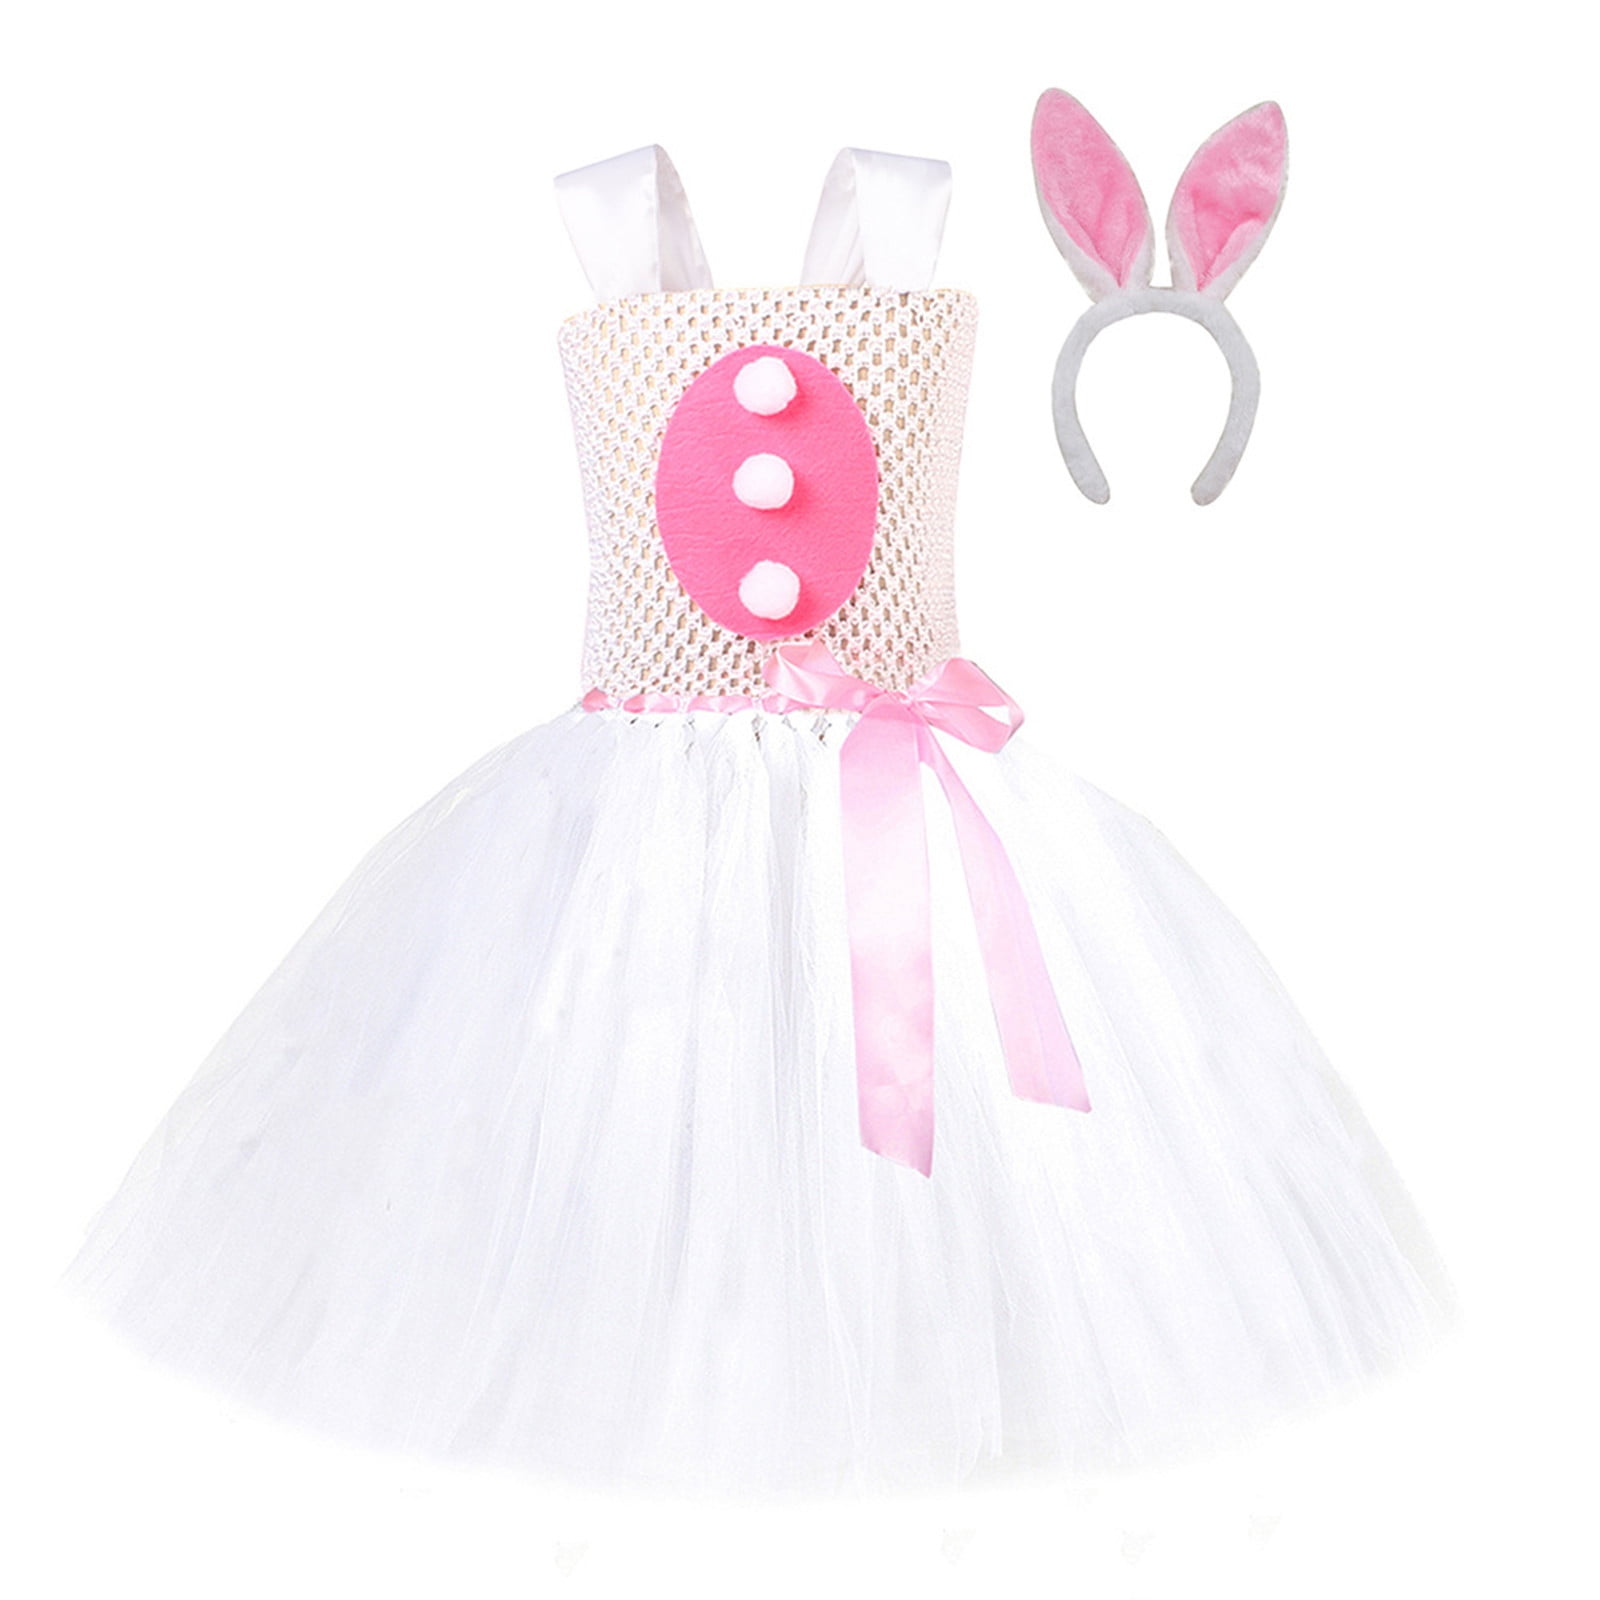 KAKU FANCY DRESSES Rabbit Pet Animal Costume -White & Pink, 7-8 Years, For  Boys & Girls Kids Costume Wear Price in India - Buy KAKU FANCY DRESSES  Rabbit Pet Animal Costume -White